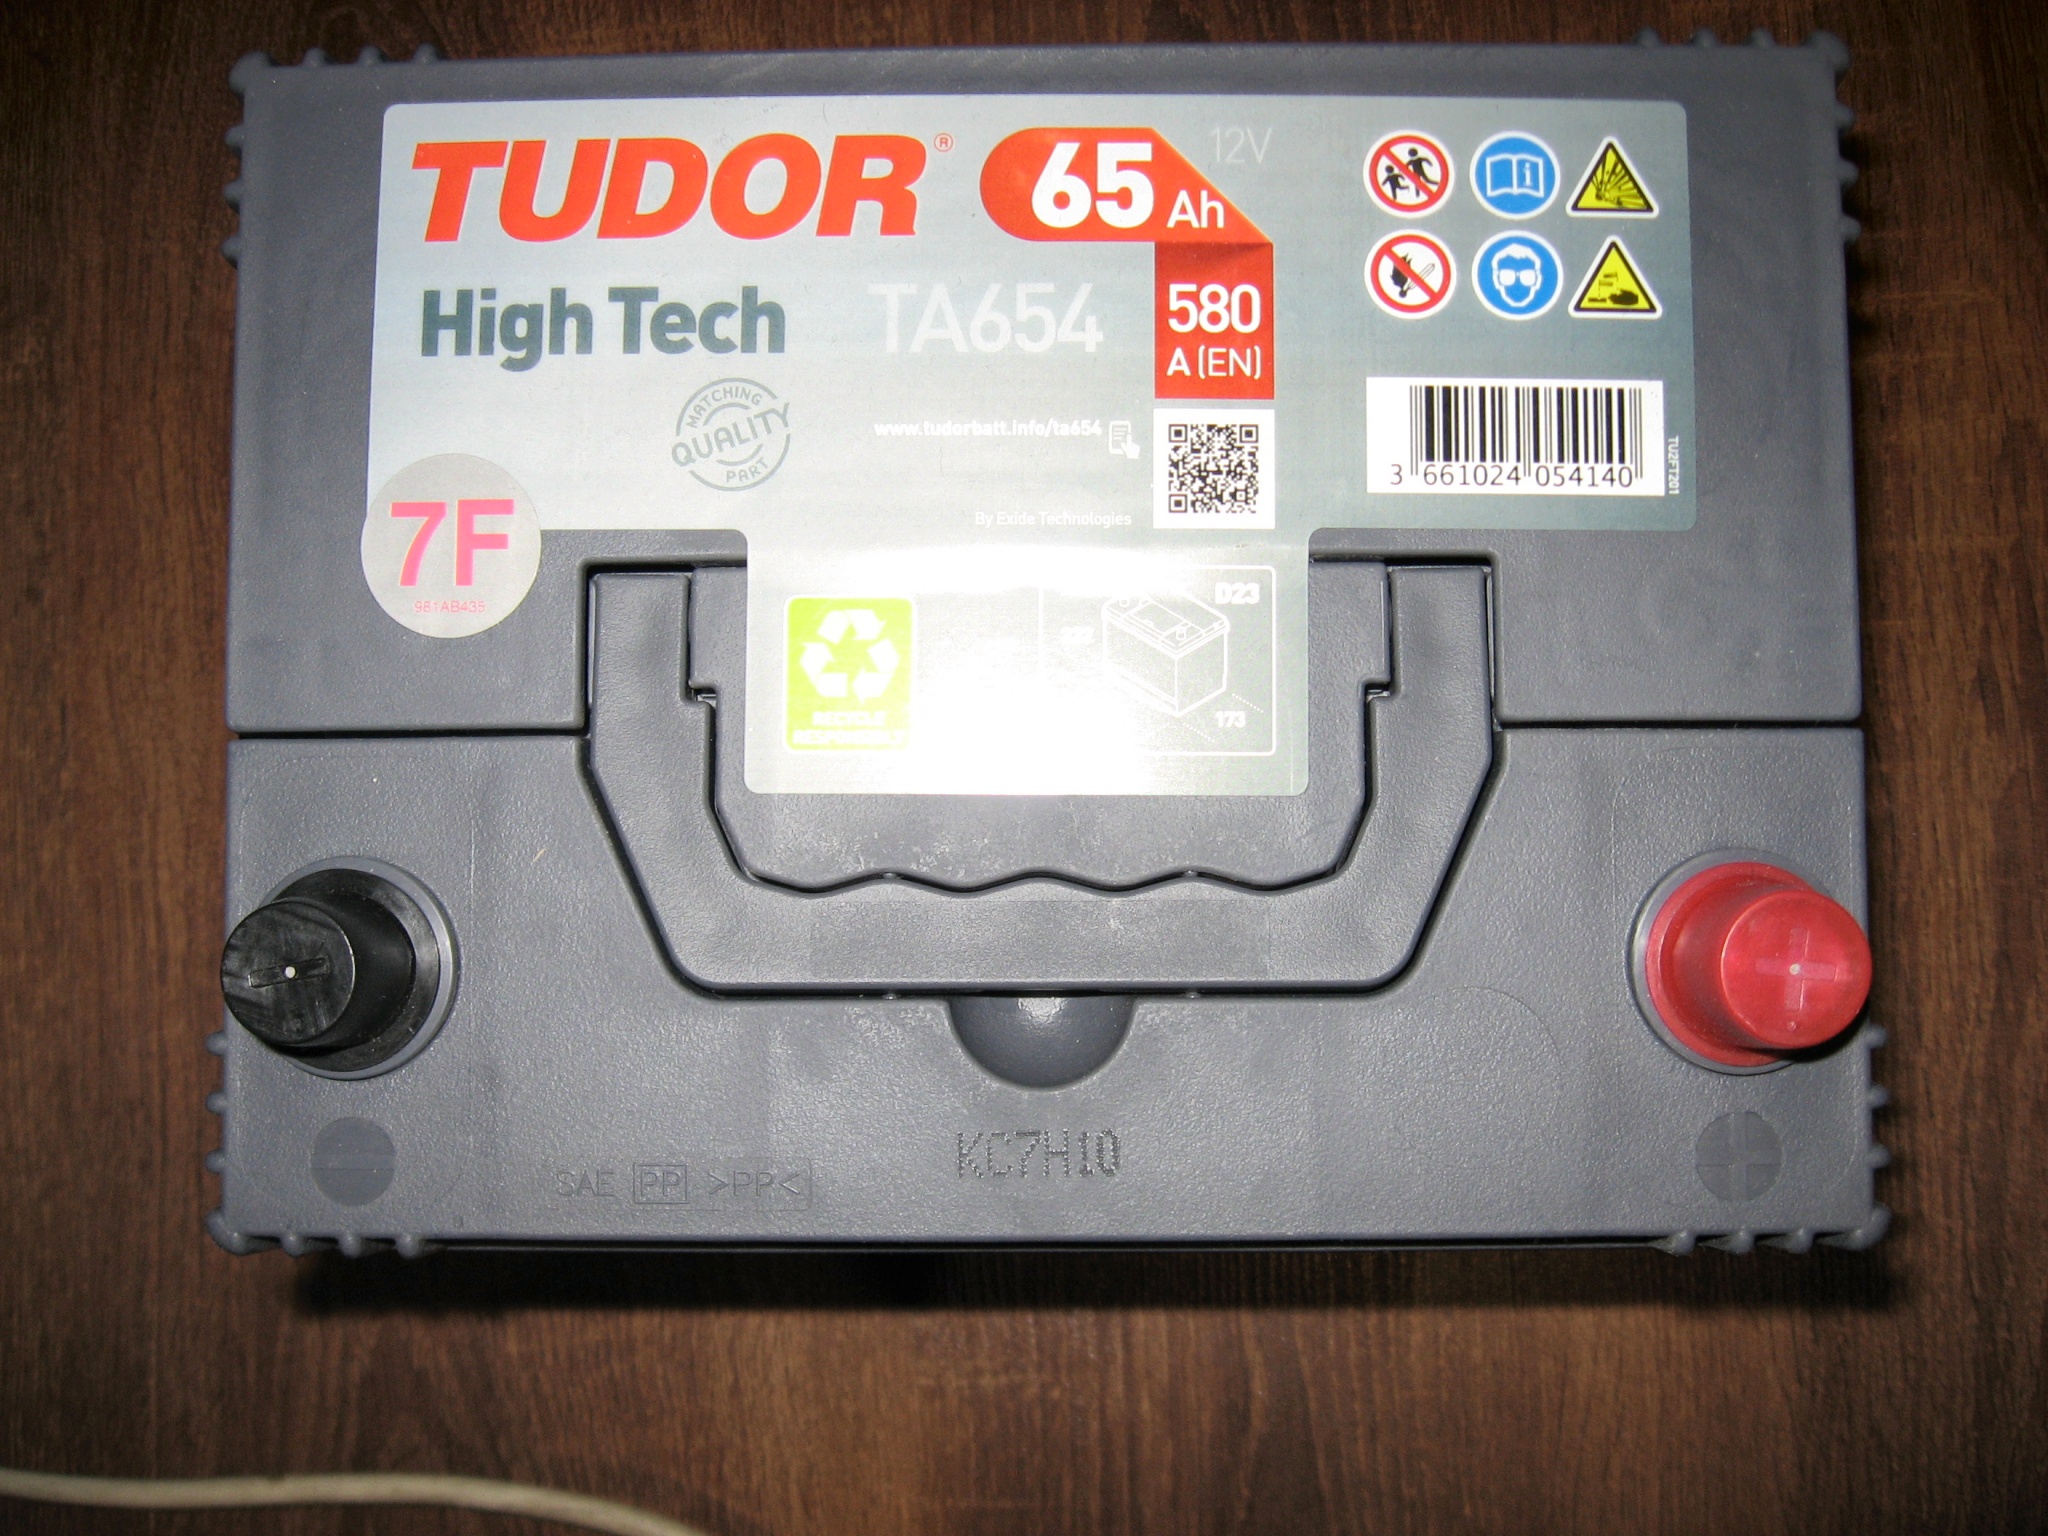 Tudor TA654. Autobatterie Tudor 65Ah 12V